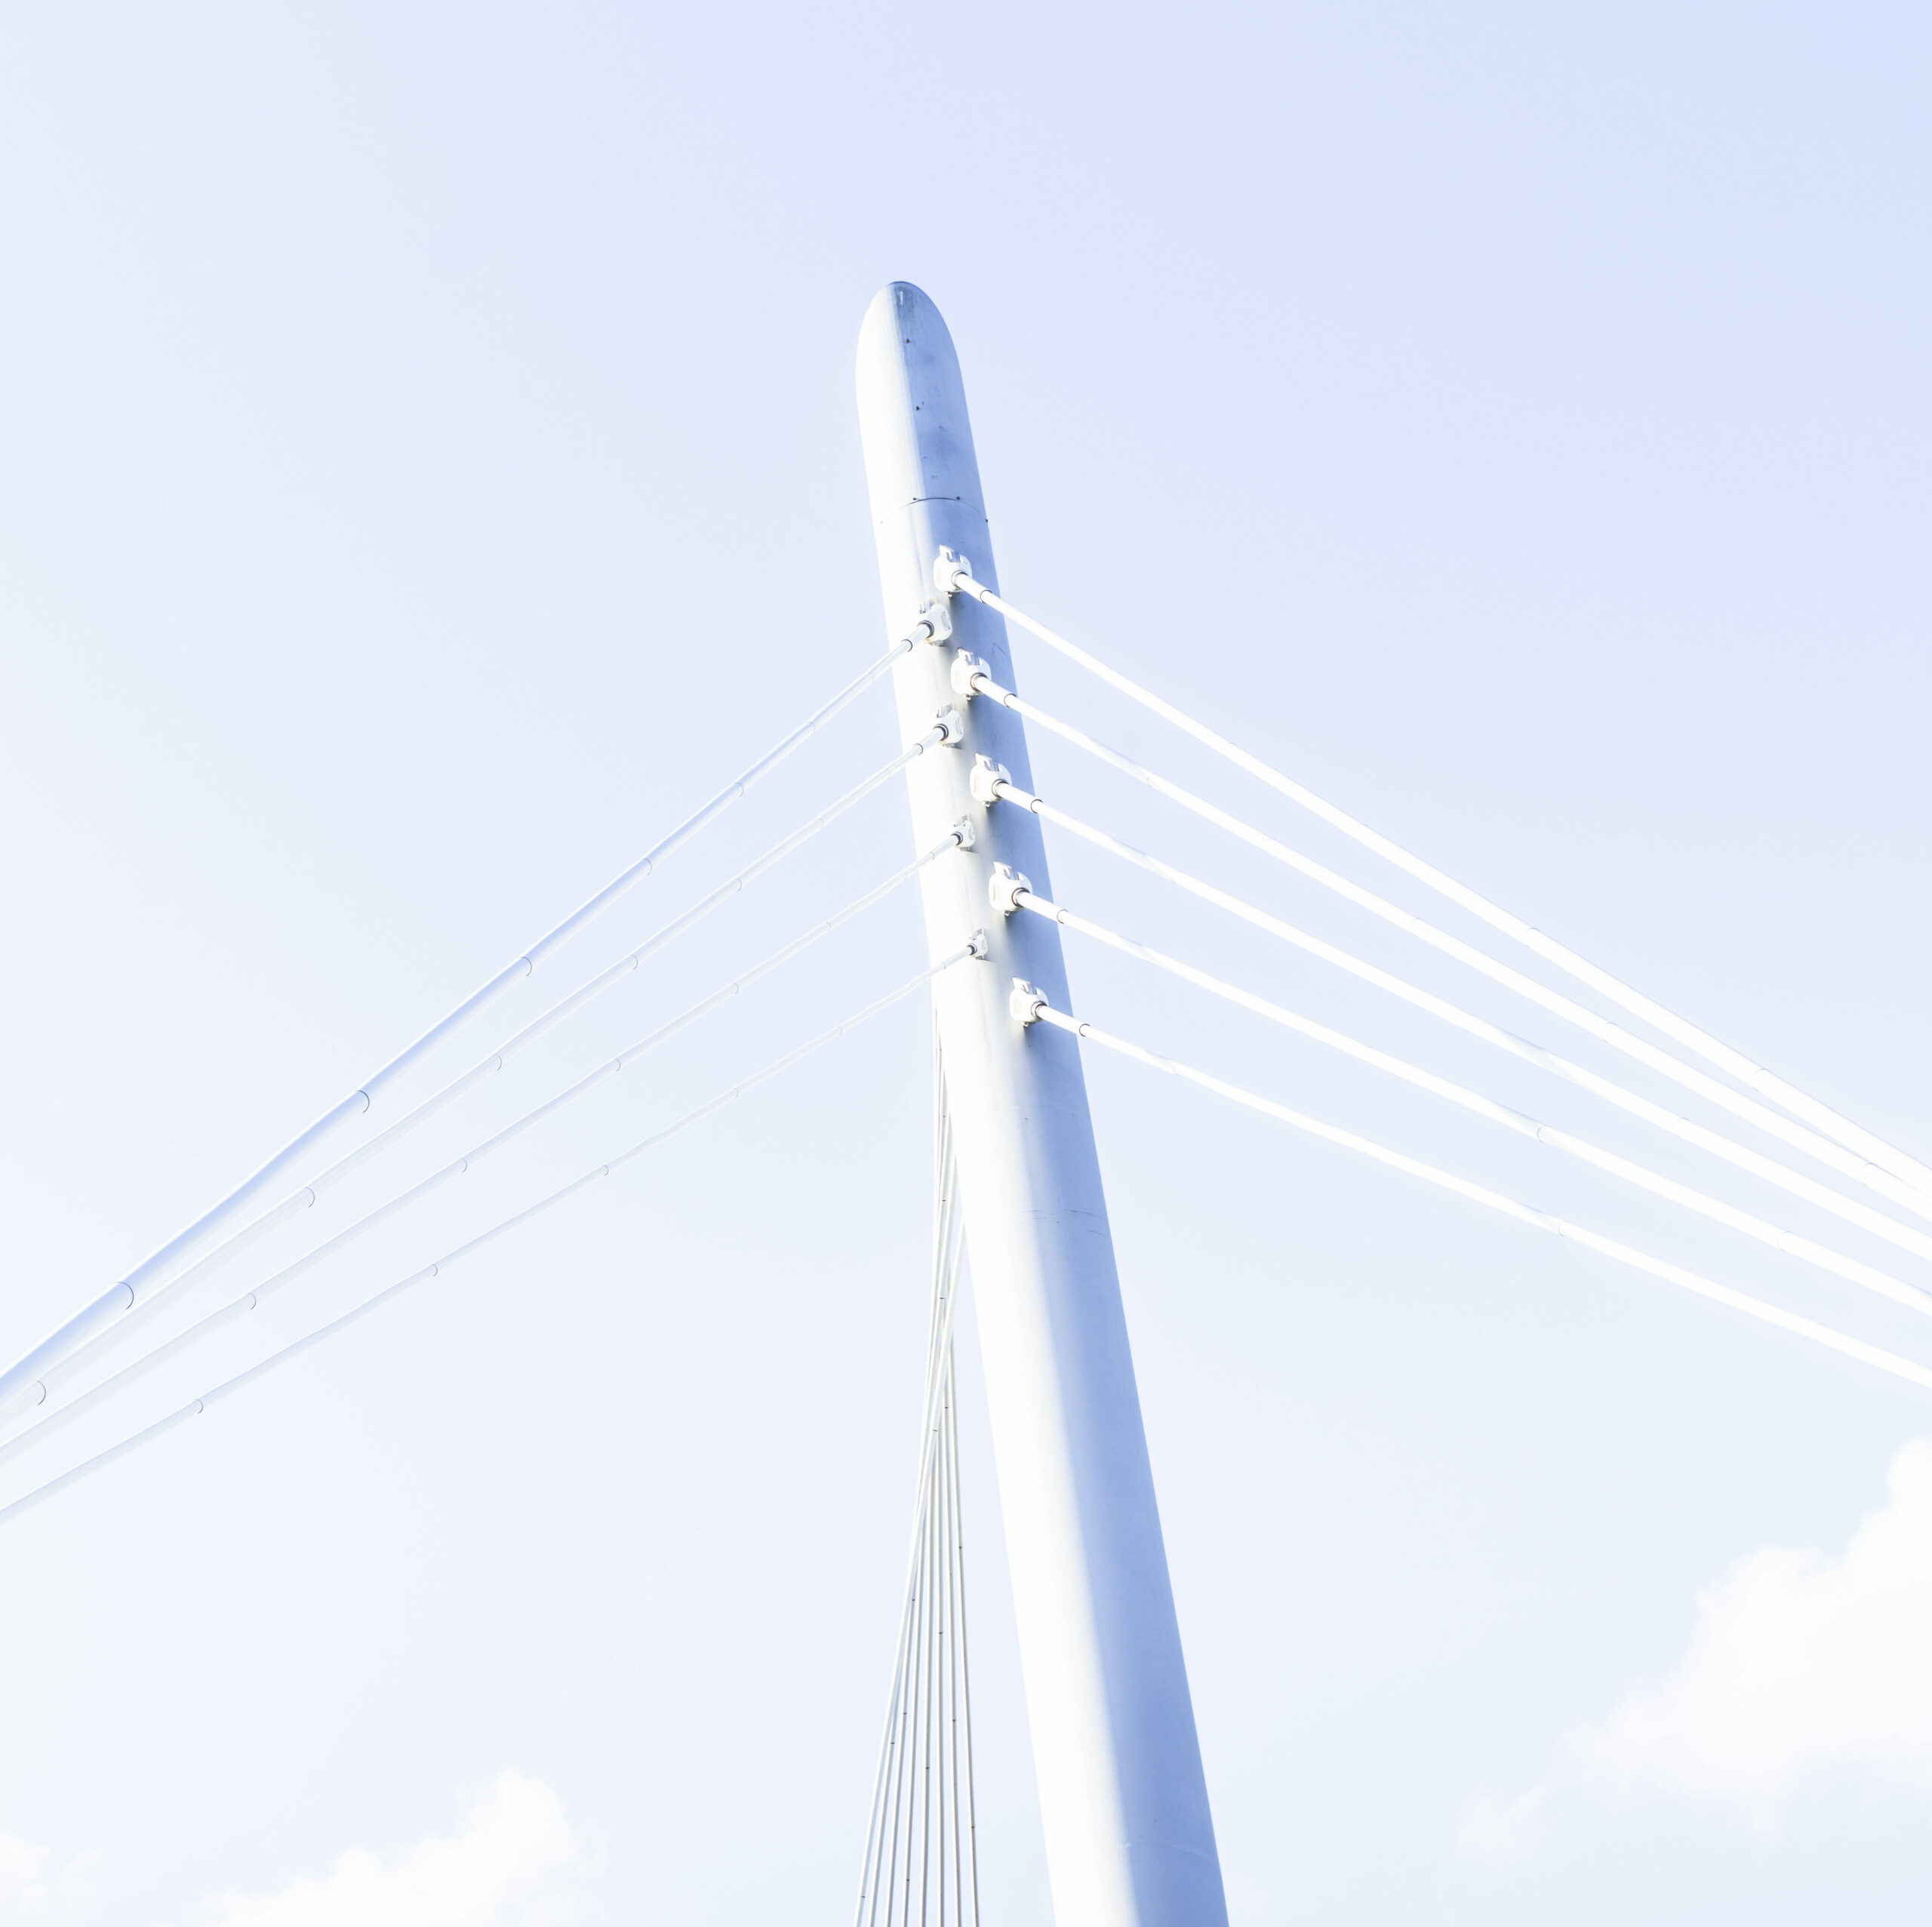 Bridge detail in Tampere South Bay